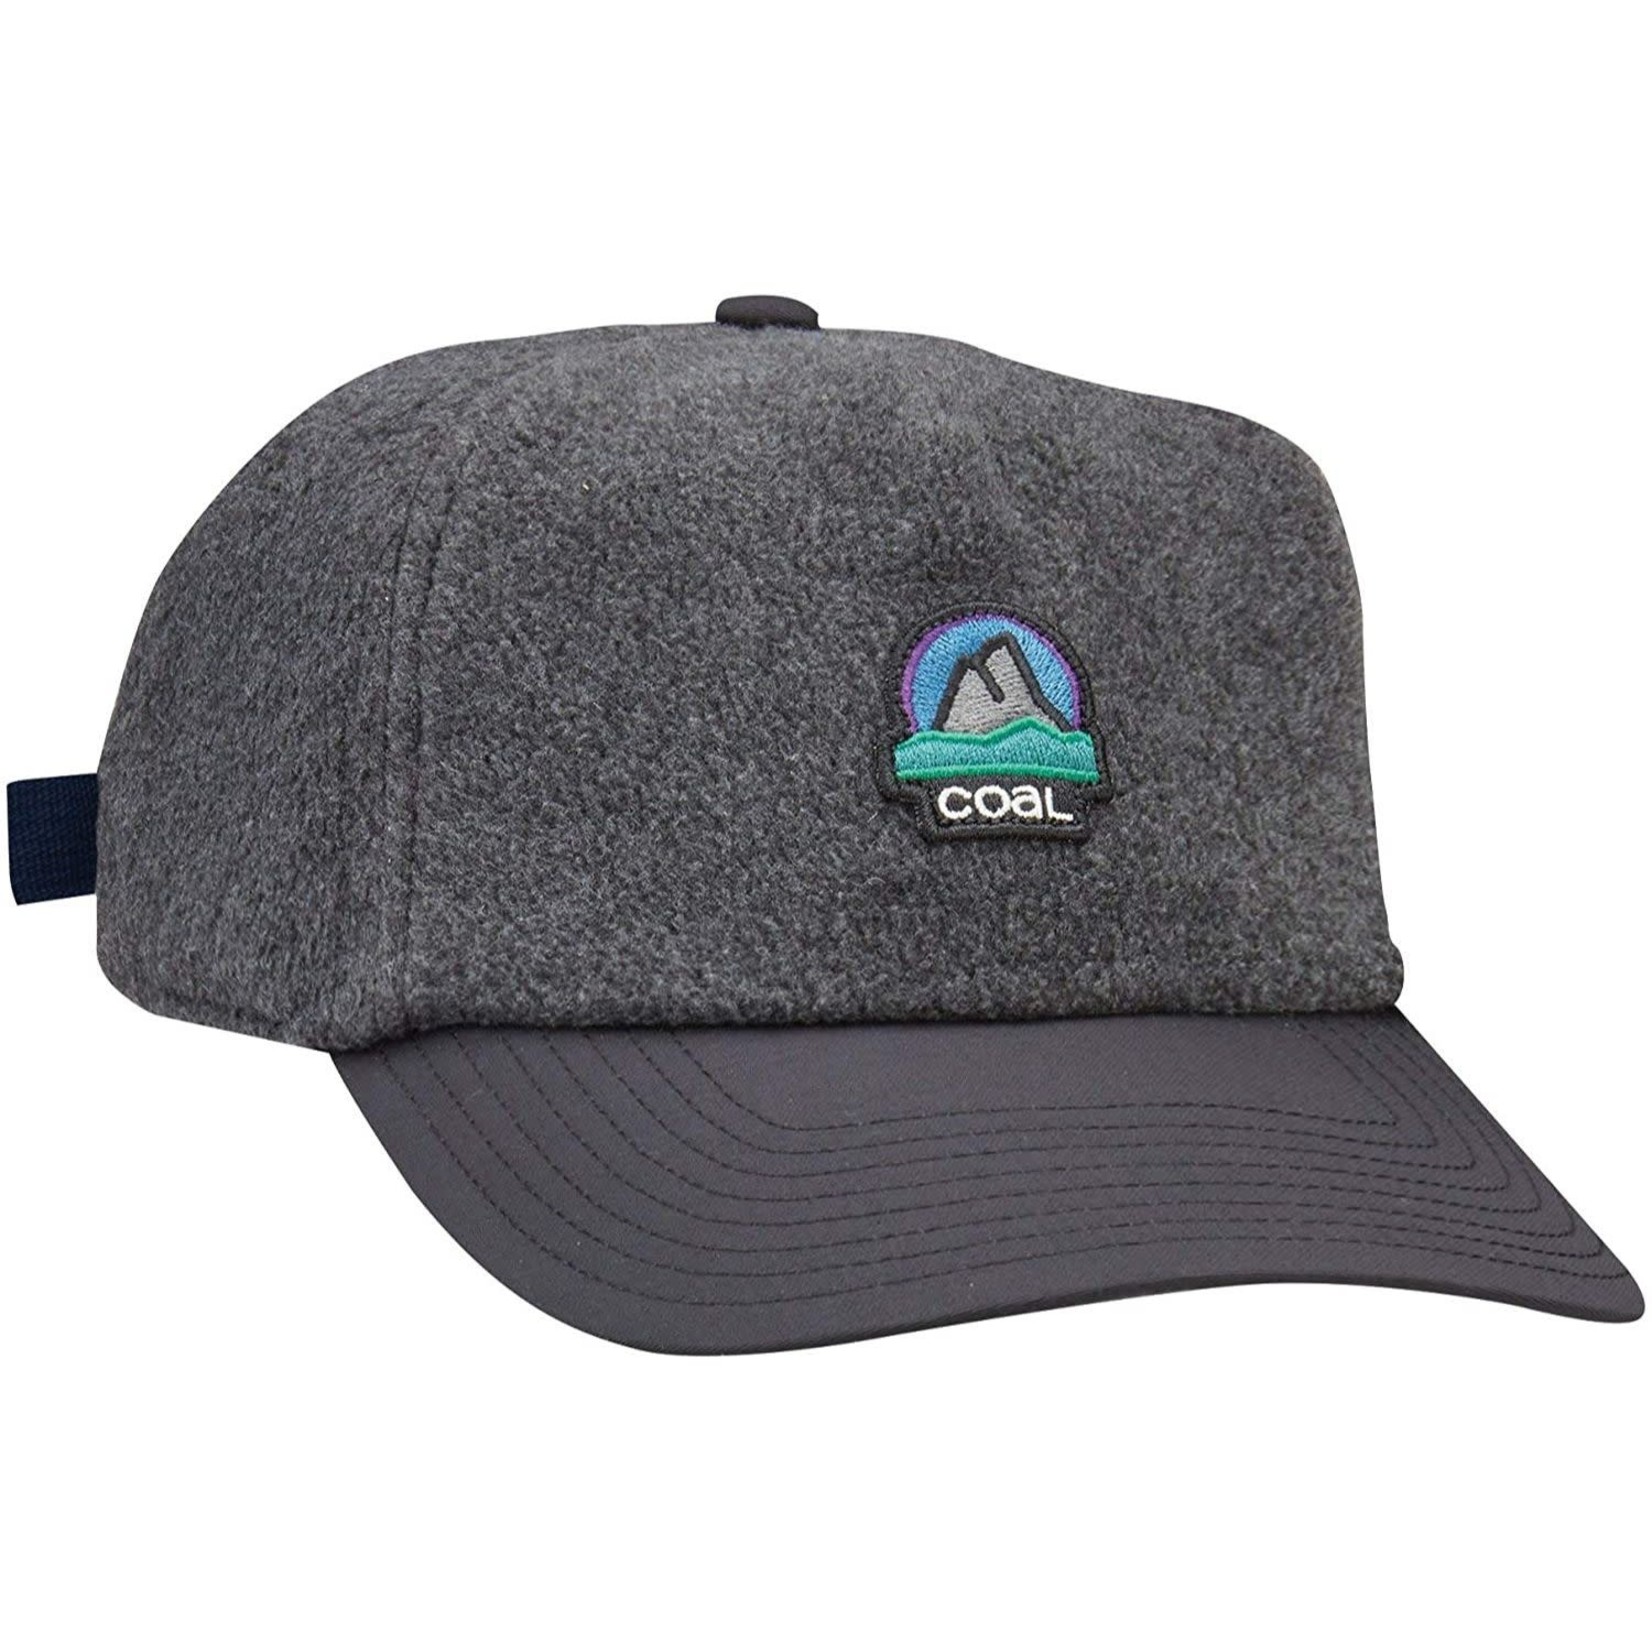 Coal Headwear Coal North Hat - Charcoal